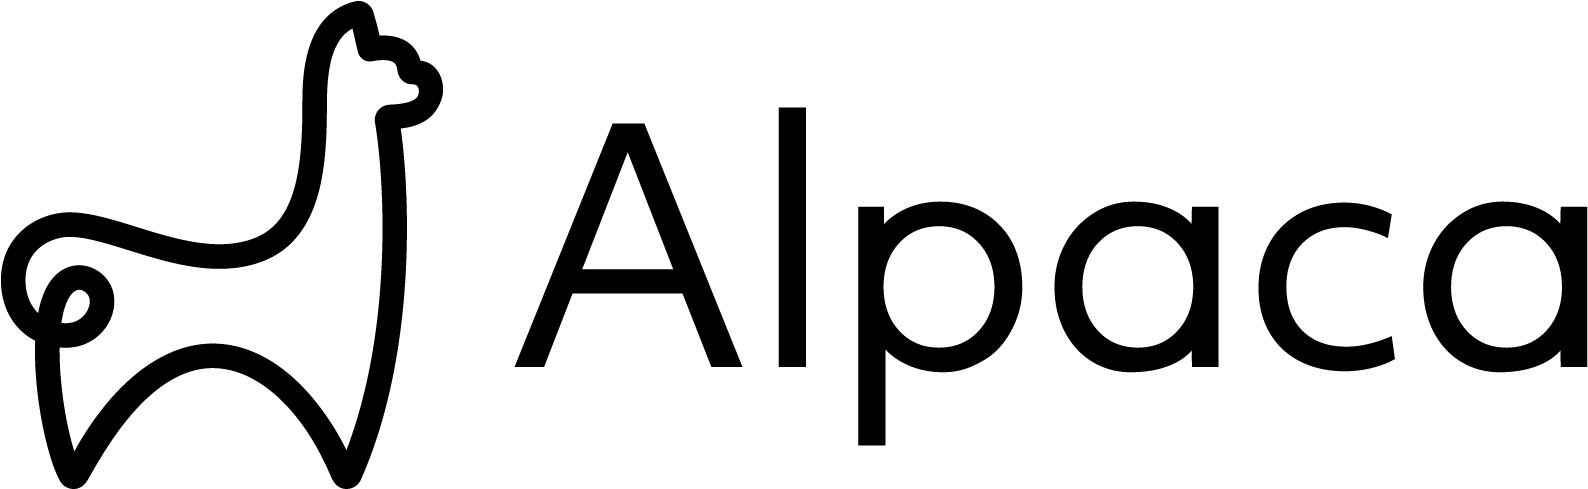 Alpaca Logo Outline PNG image